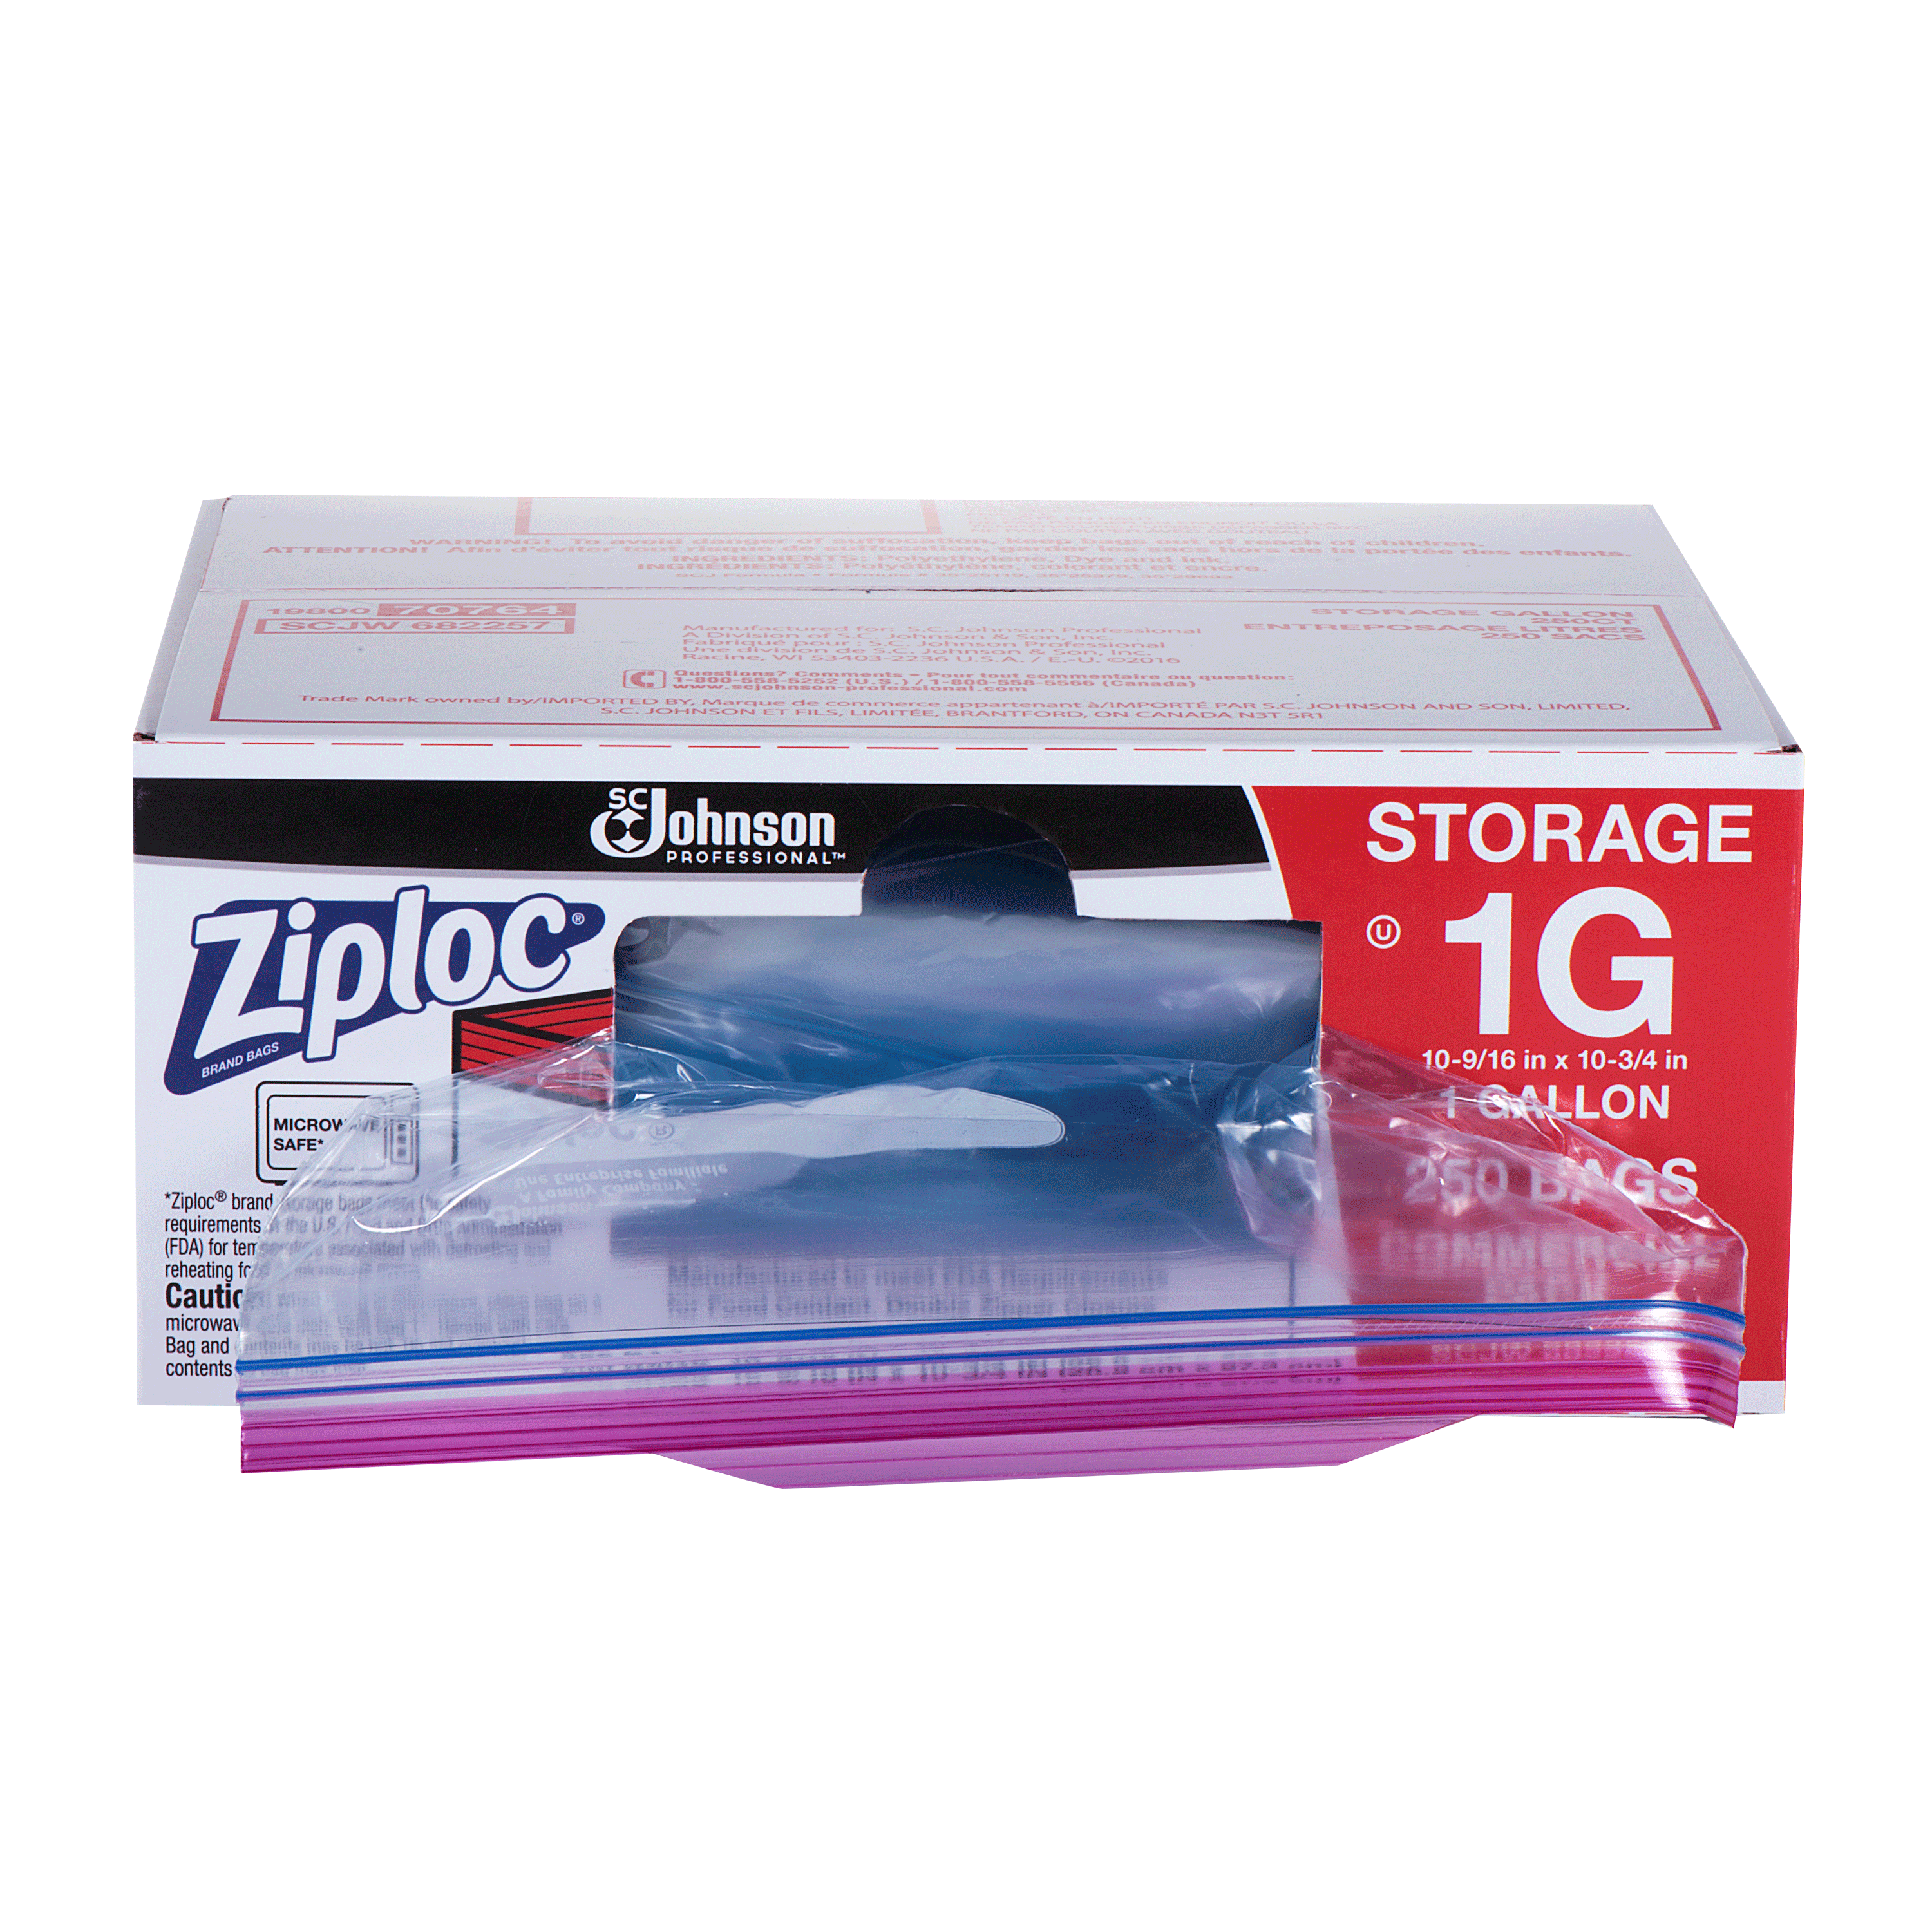 Ziploc Storage Bags 1 Gallon Box Of 250 Bags - Office Depot